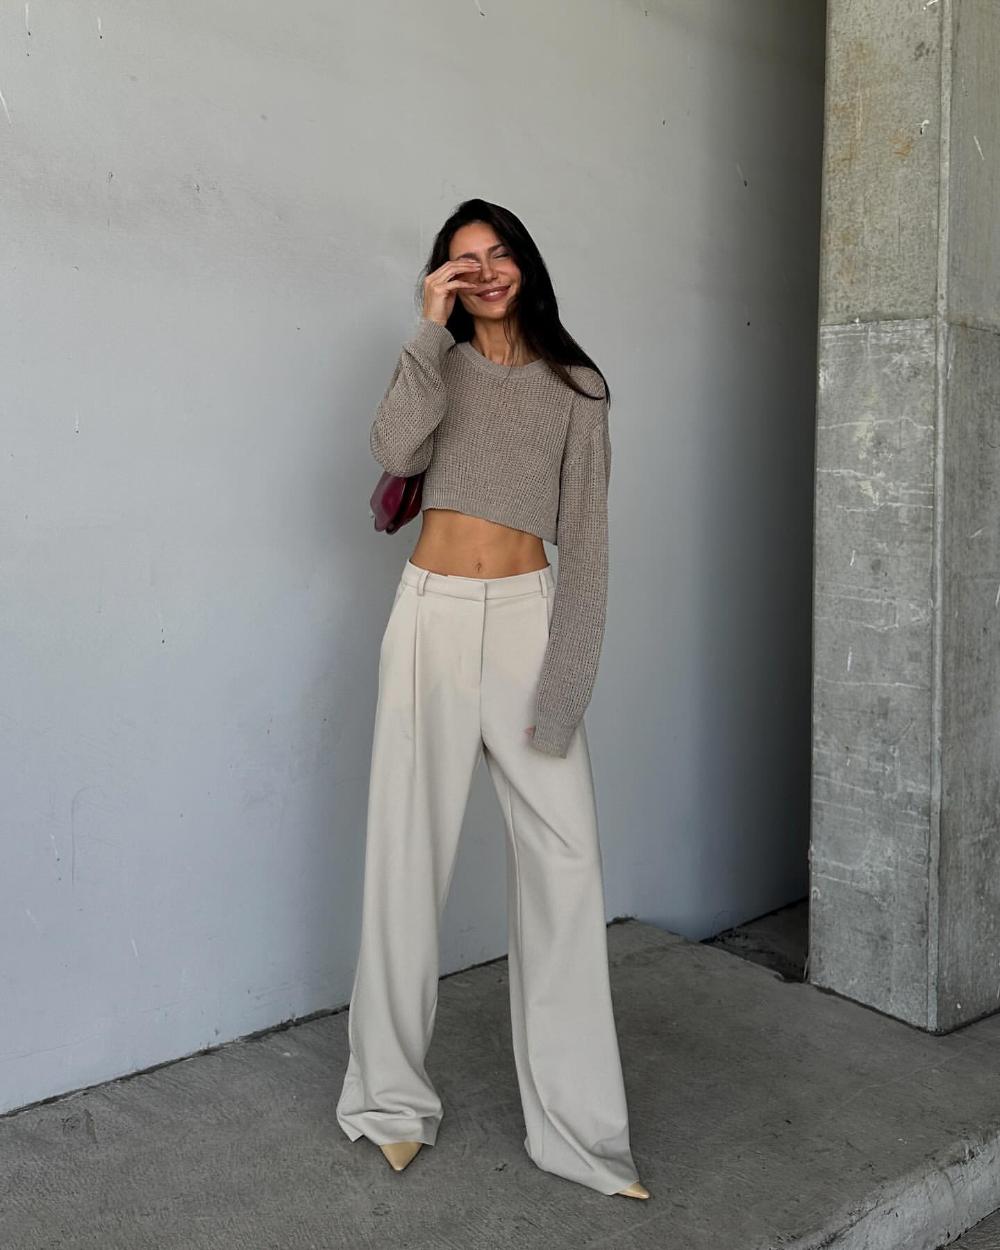 Petra Mackova Minimalist Outfits The Frankie Shop Cropped Sweater Beige Wide-Leg Pants